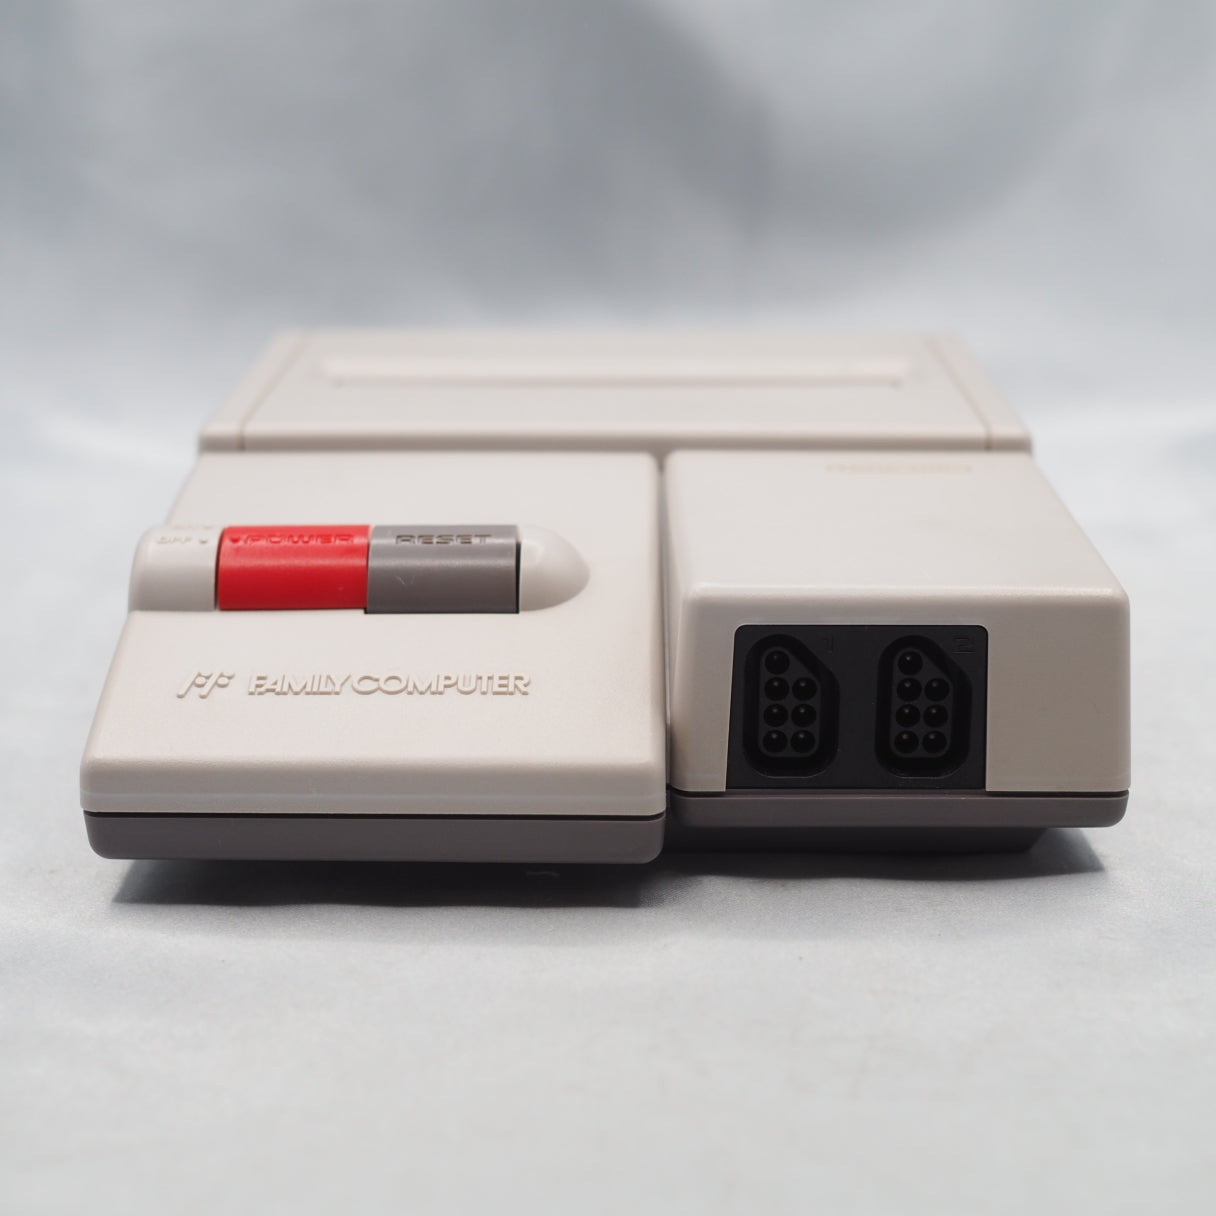 New Famicom Console system